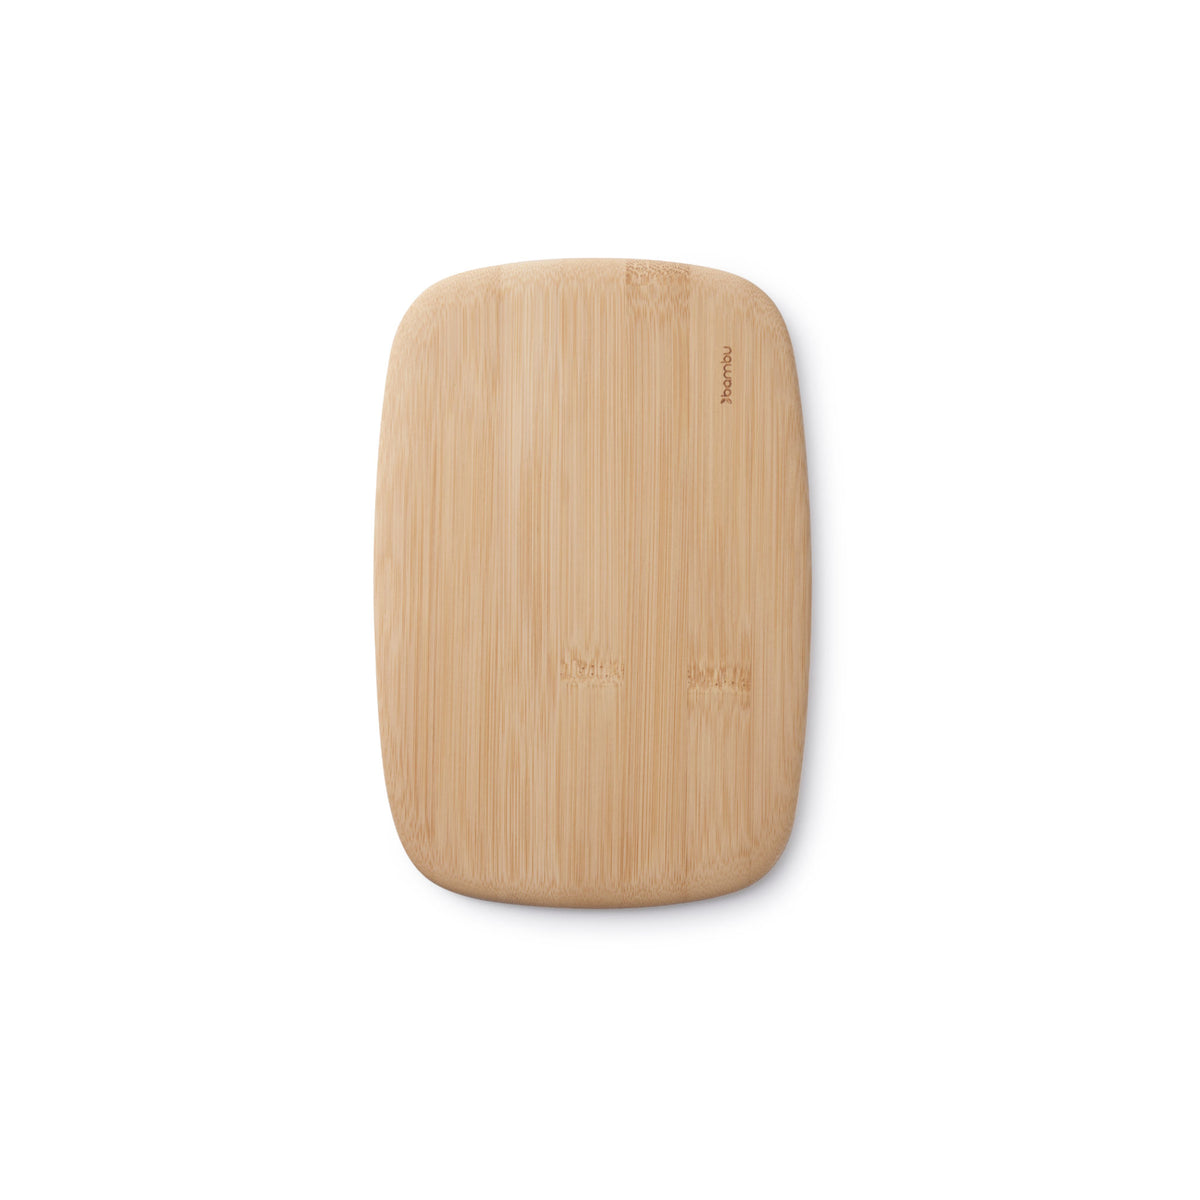 Bamboo Cutting Board - Small Rectangle - Western Heritage Company, Inc